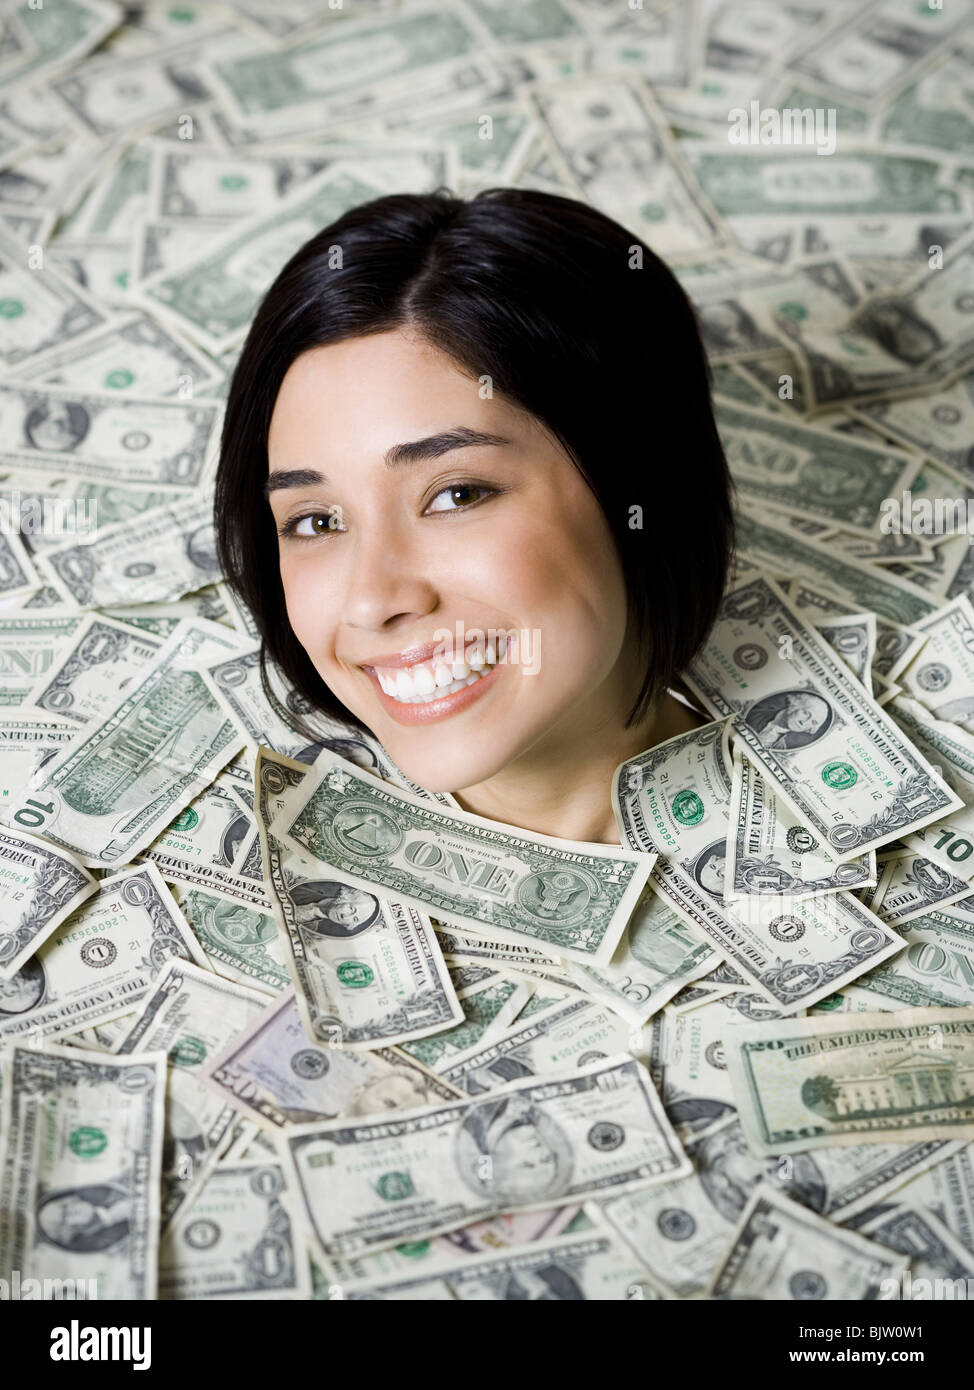 Head of woman emerging from dollar bills Stock Photo